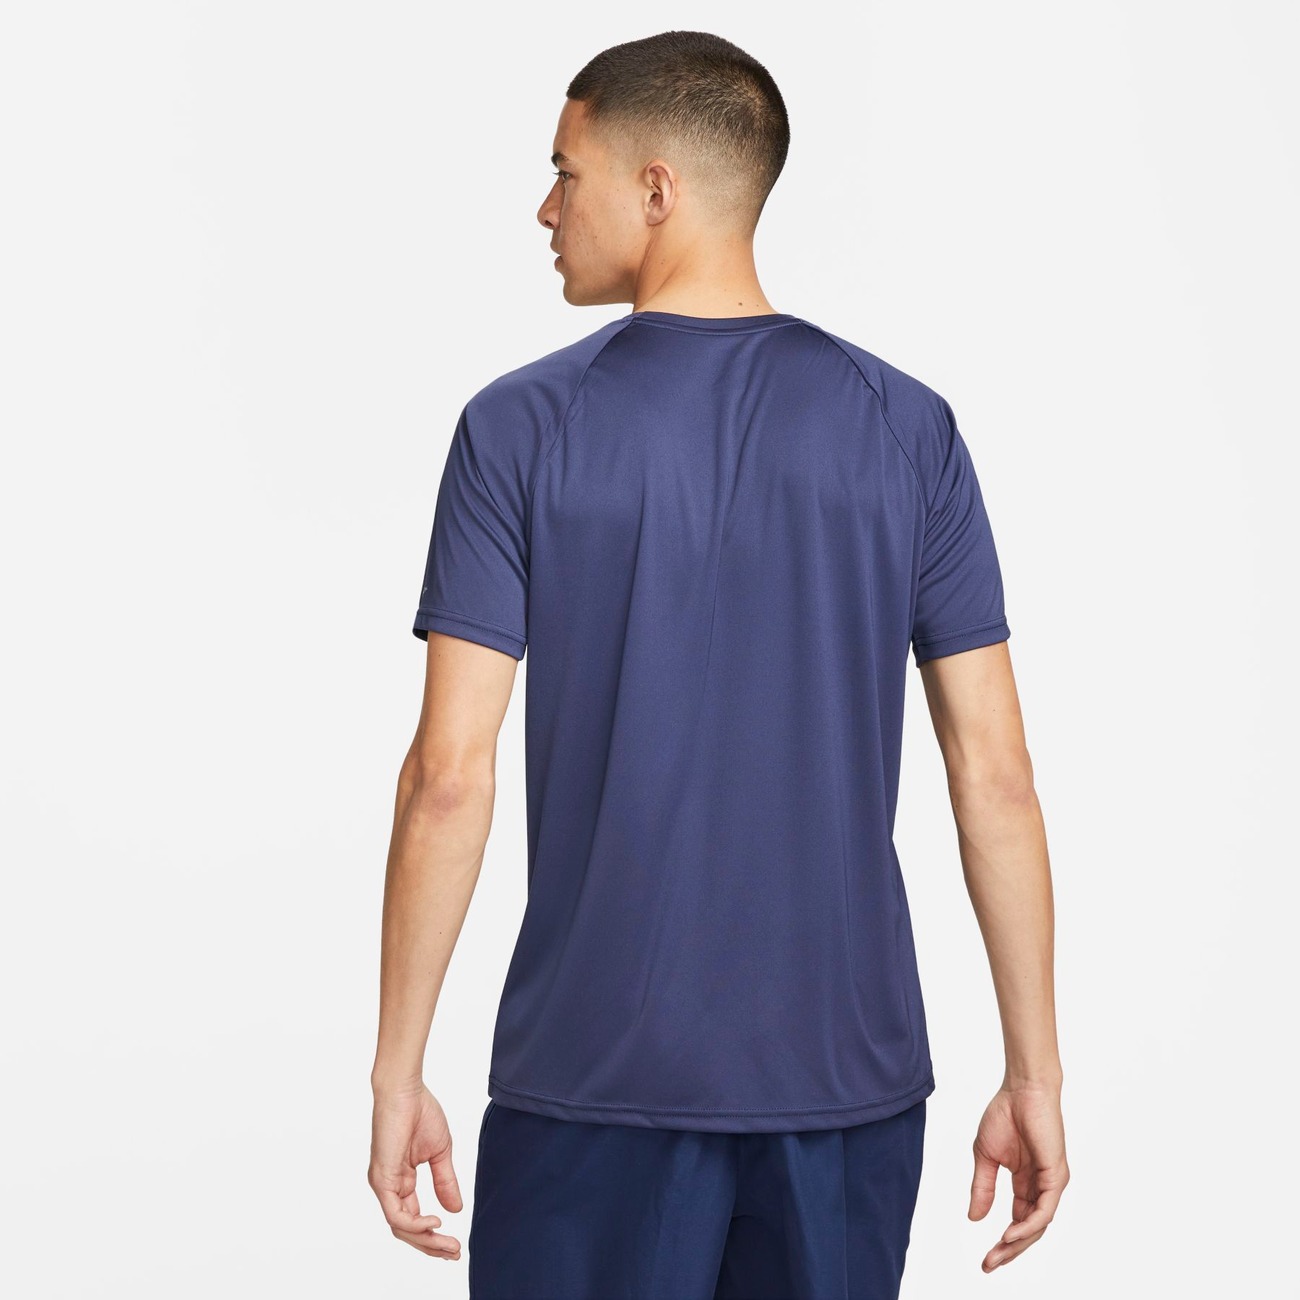 Camiseta Nike Essential Hydro Masculina - Foto 2